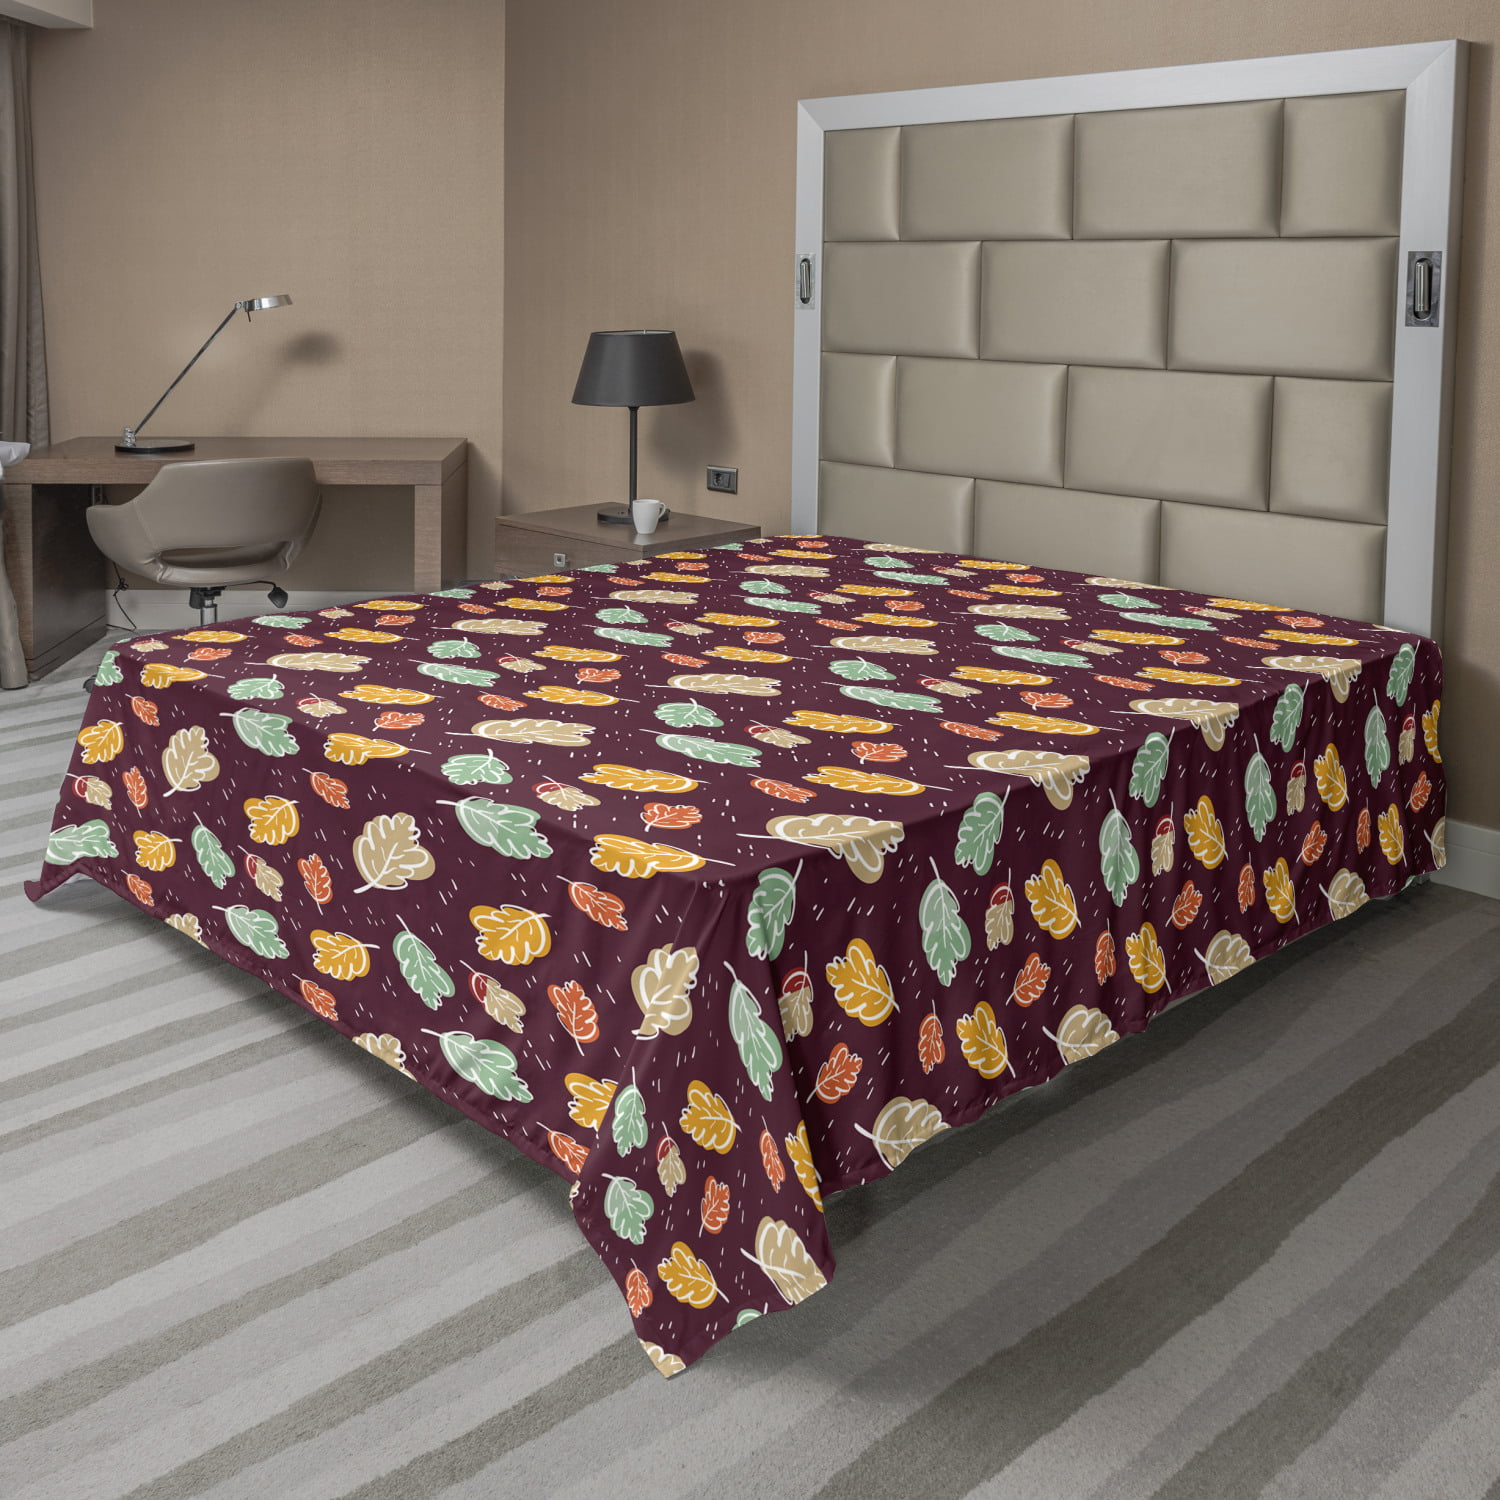 Ambesonne Colorful Fun Flat Sheet Top Sheet Decorative Bedding 6 Sizes 